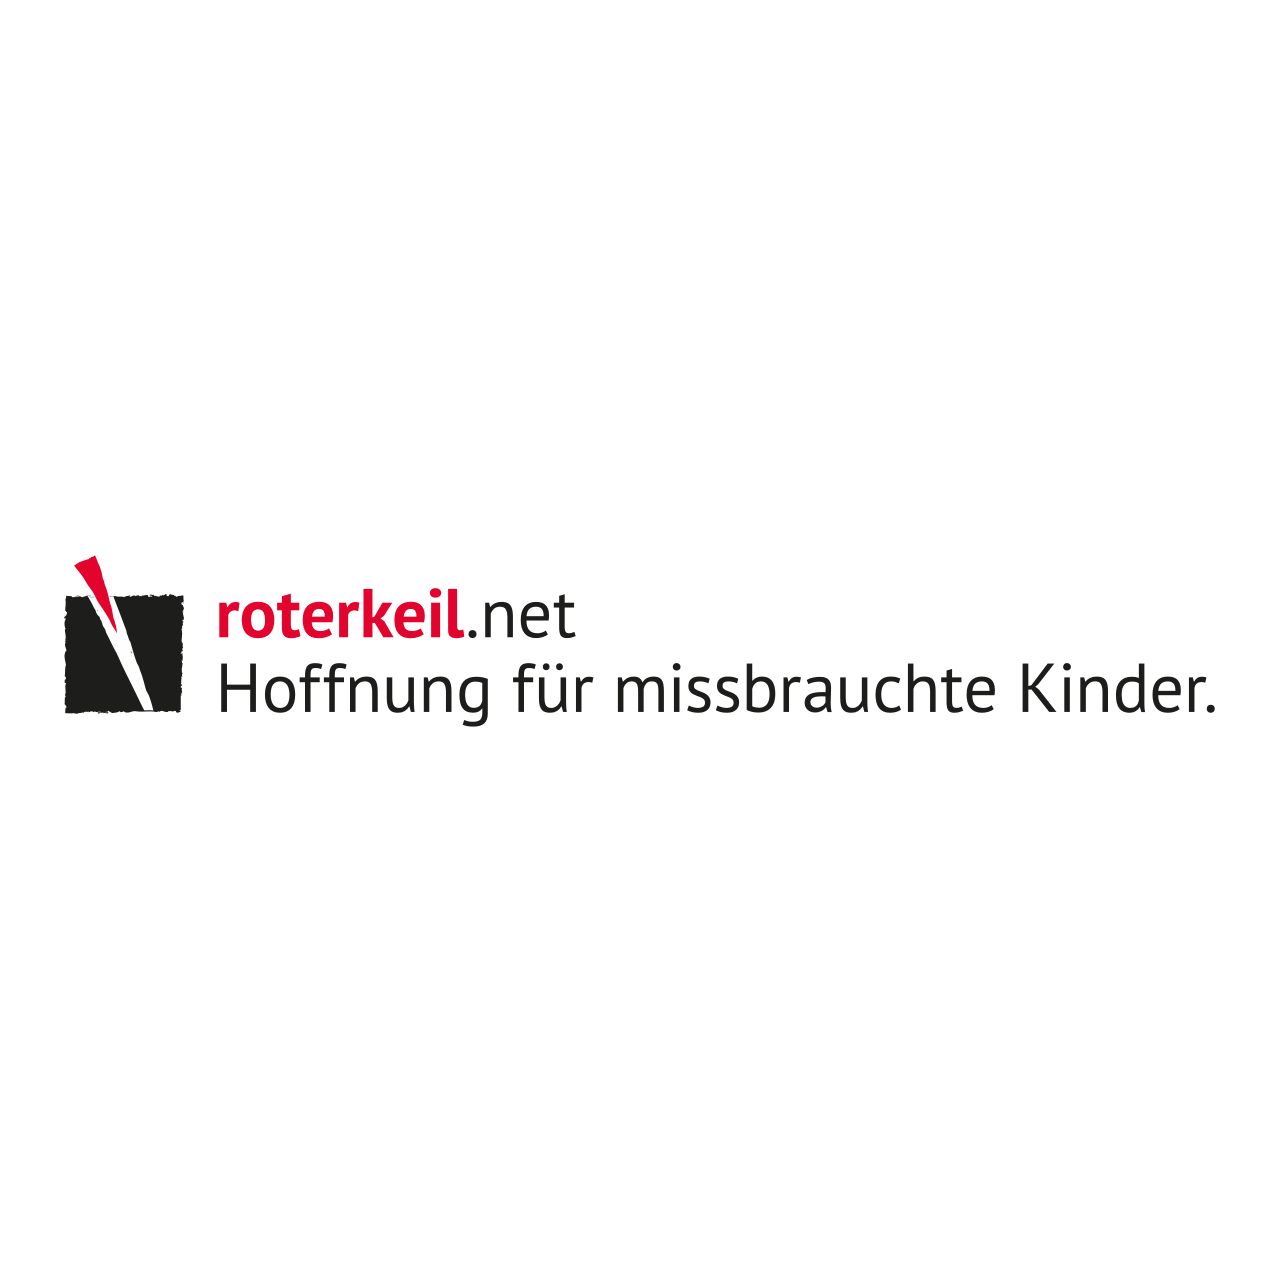 (c) Roterkeil.net